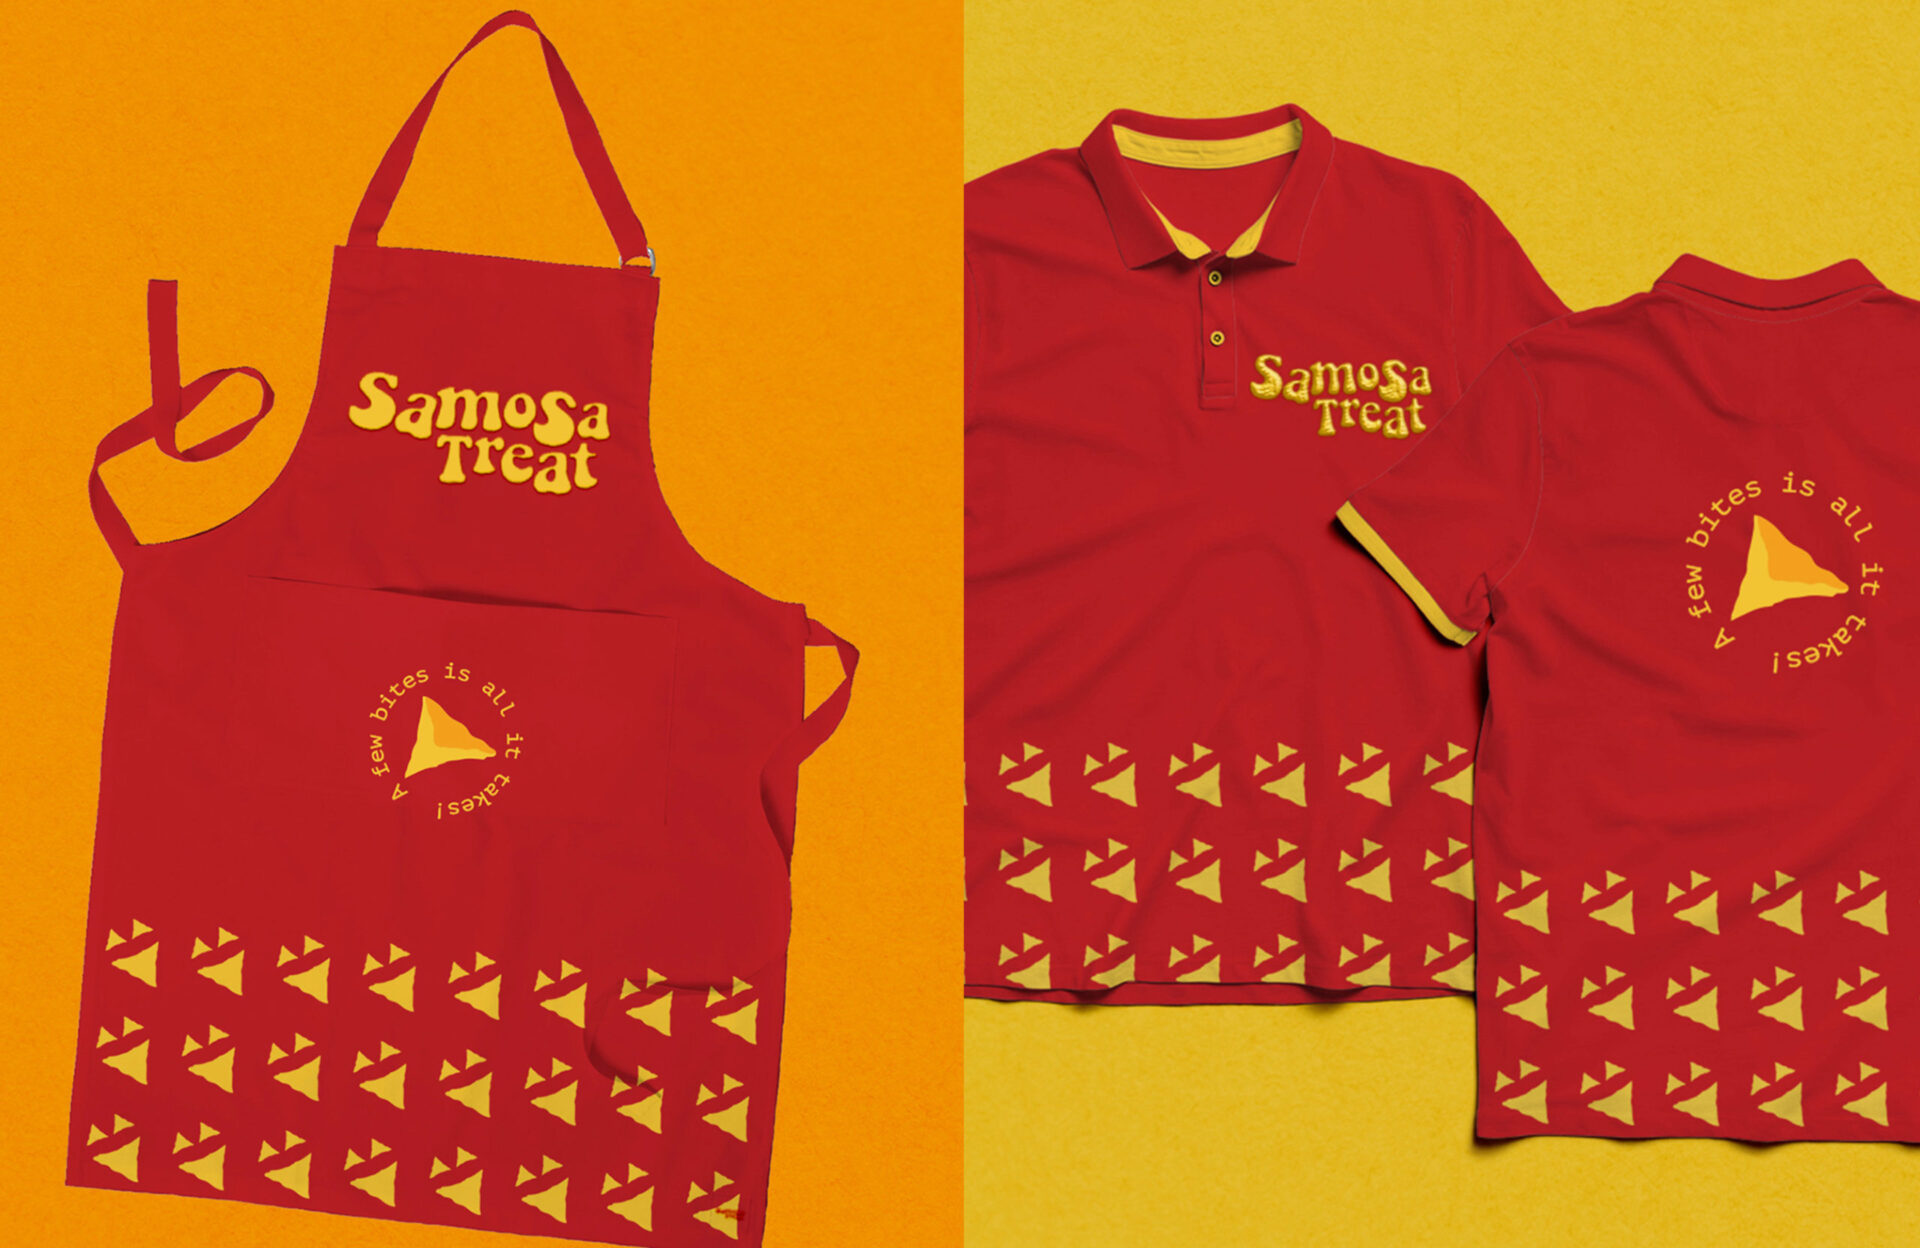 cafe-snacking-restaurant-branding-apparel-clothing-apron-tshirt-design-samosa-treat-reinaphics-chennai